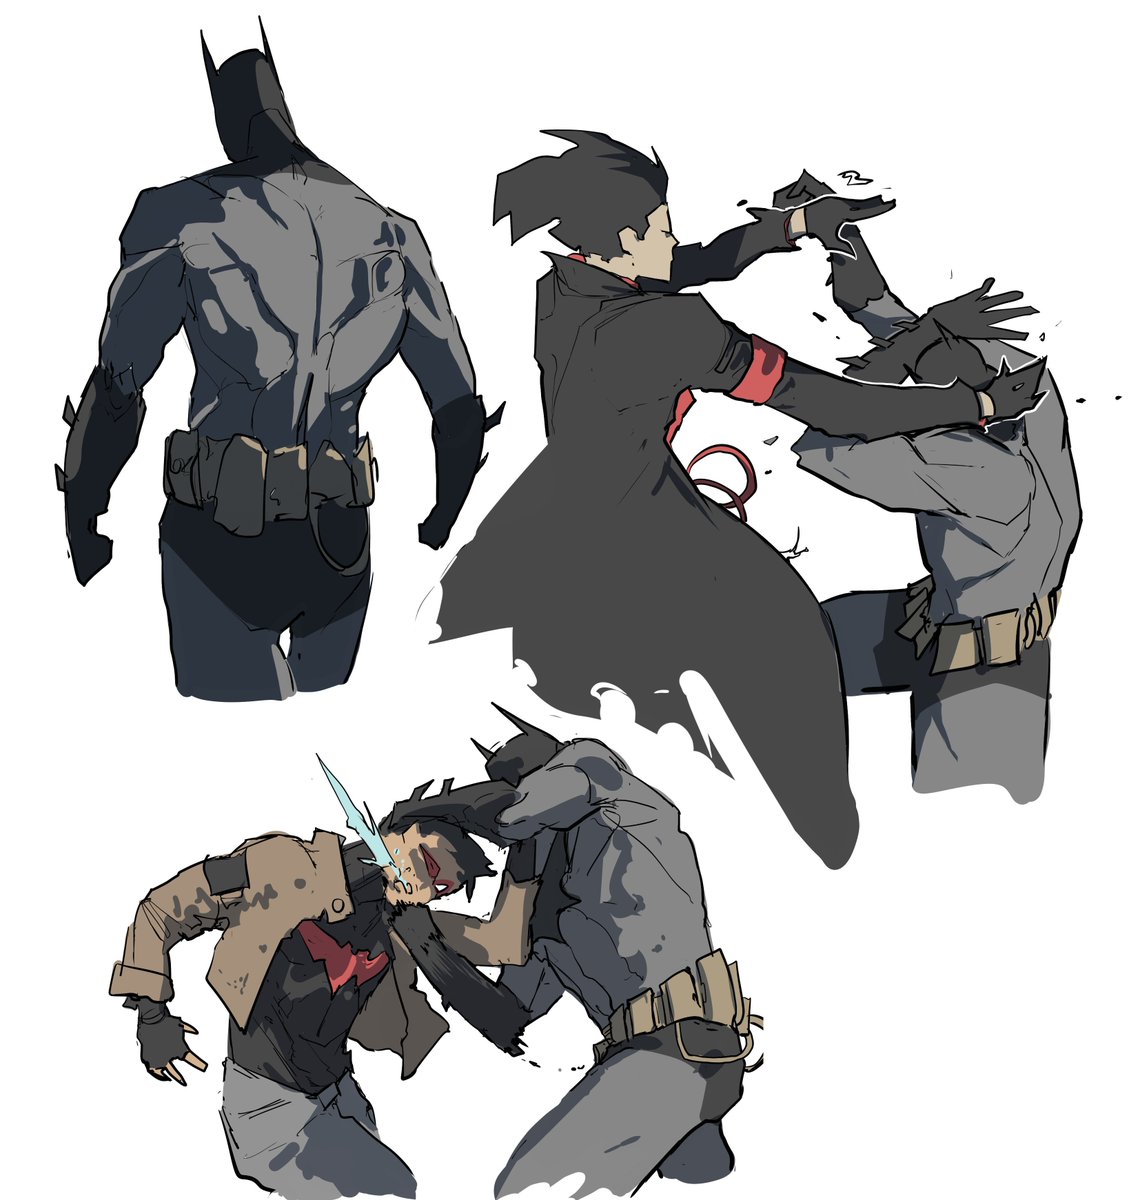 No cape Batman = Superior Batman https://t.co/hVpm7jSCsI 